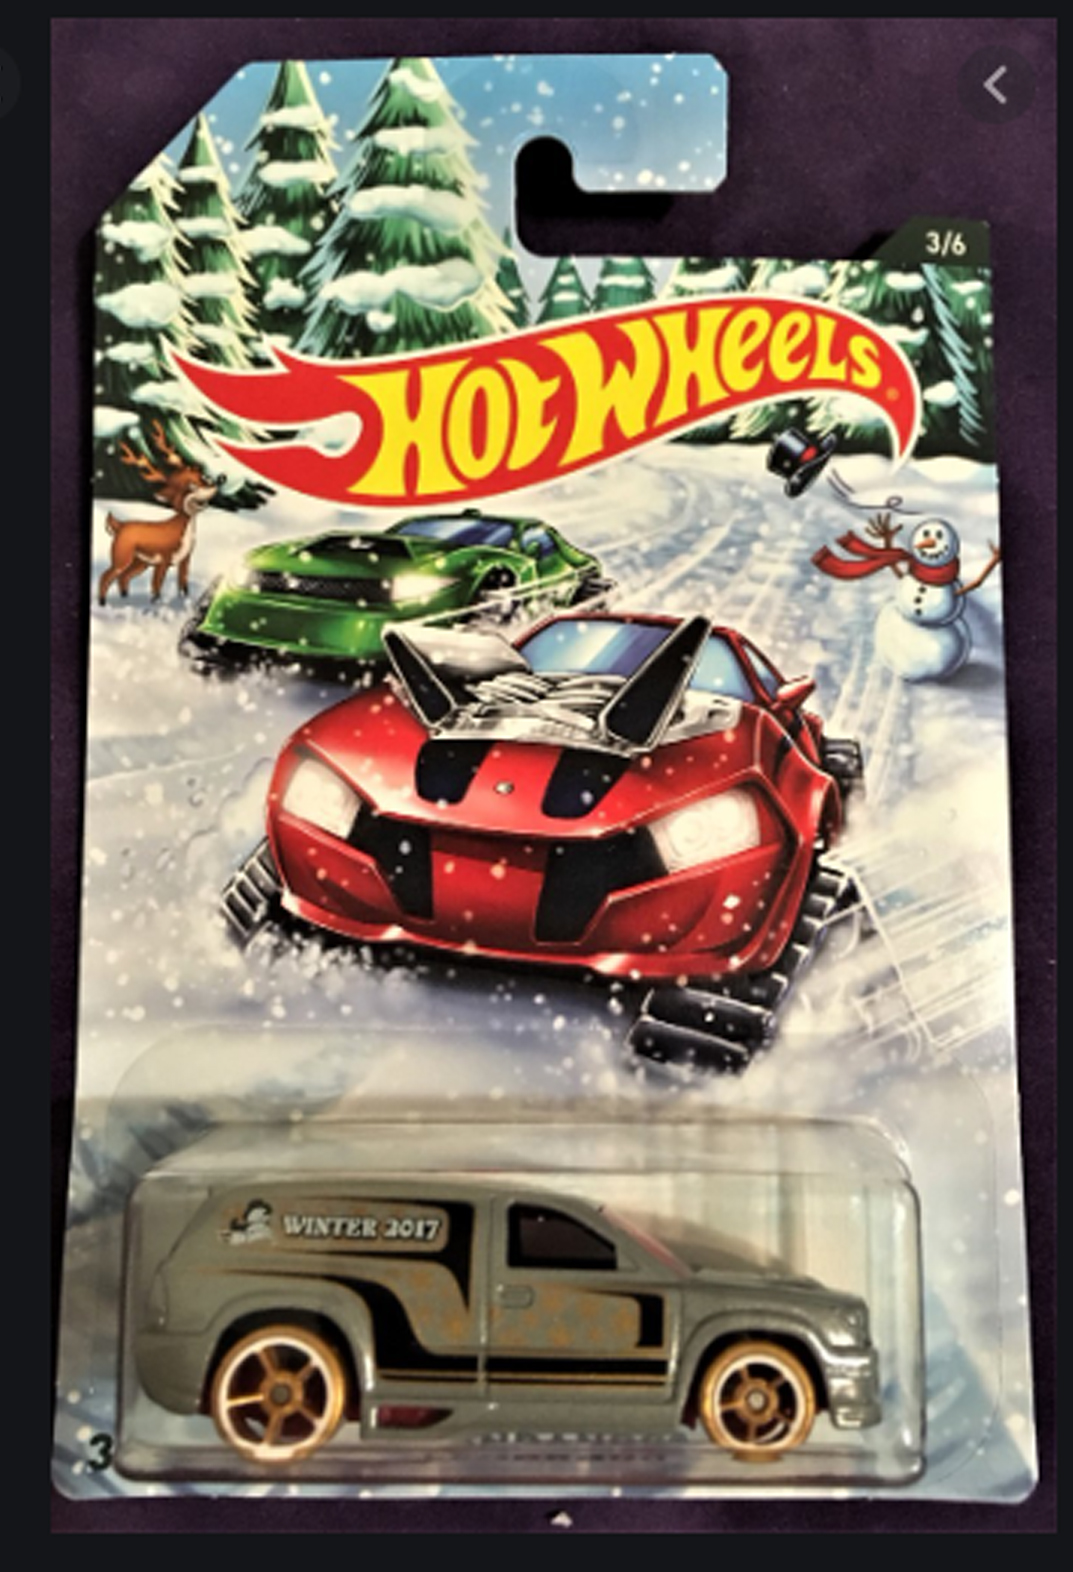 hot wheels toys online shopping